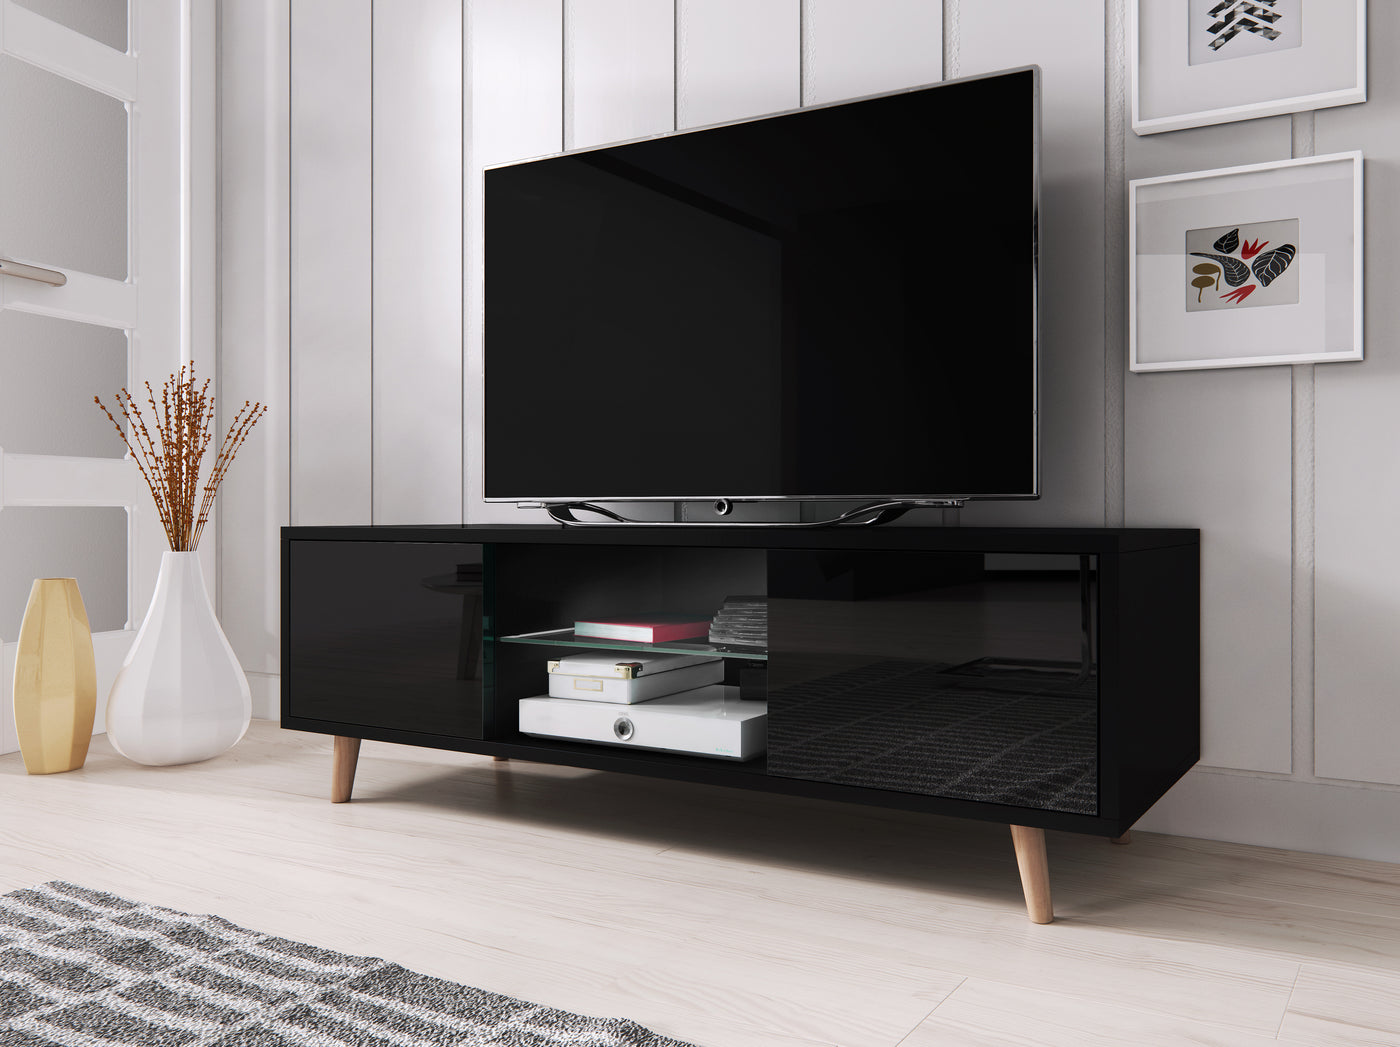 Sweden tv-taso 140cm, kolme eri väriä - Mööpeli.com